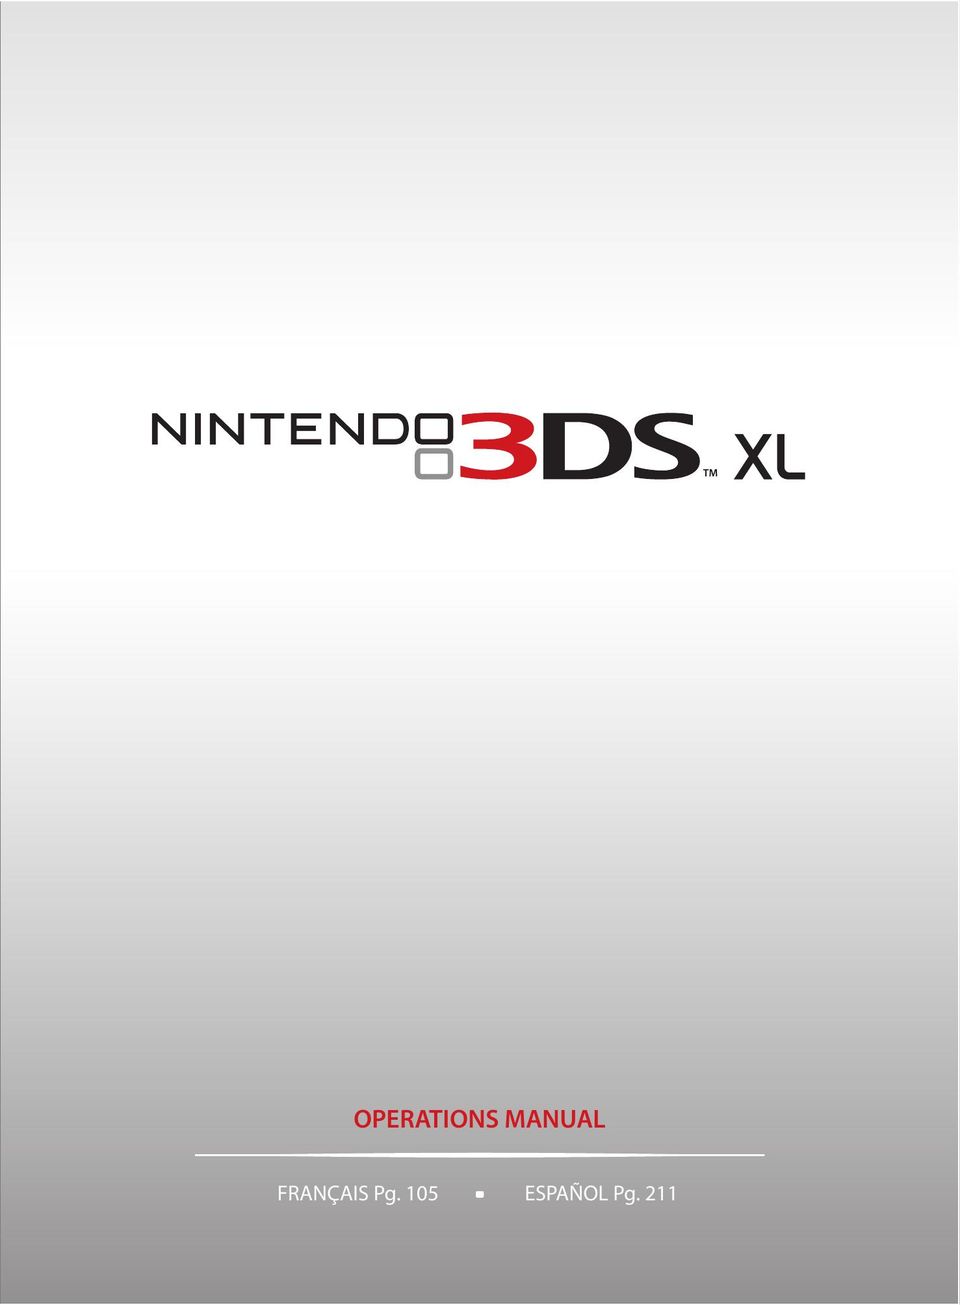 Nintendo 3DS XL Handheld Game System User Manual